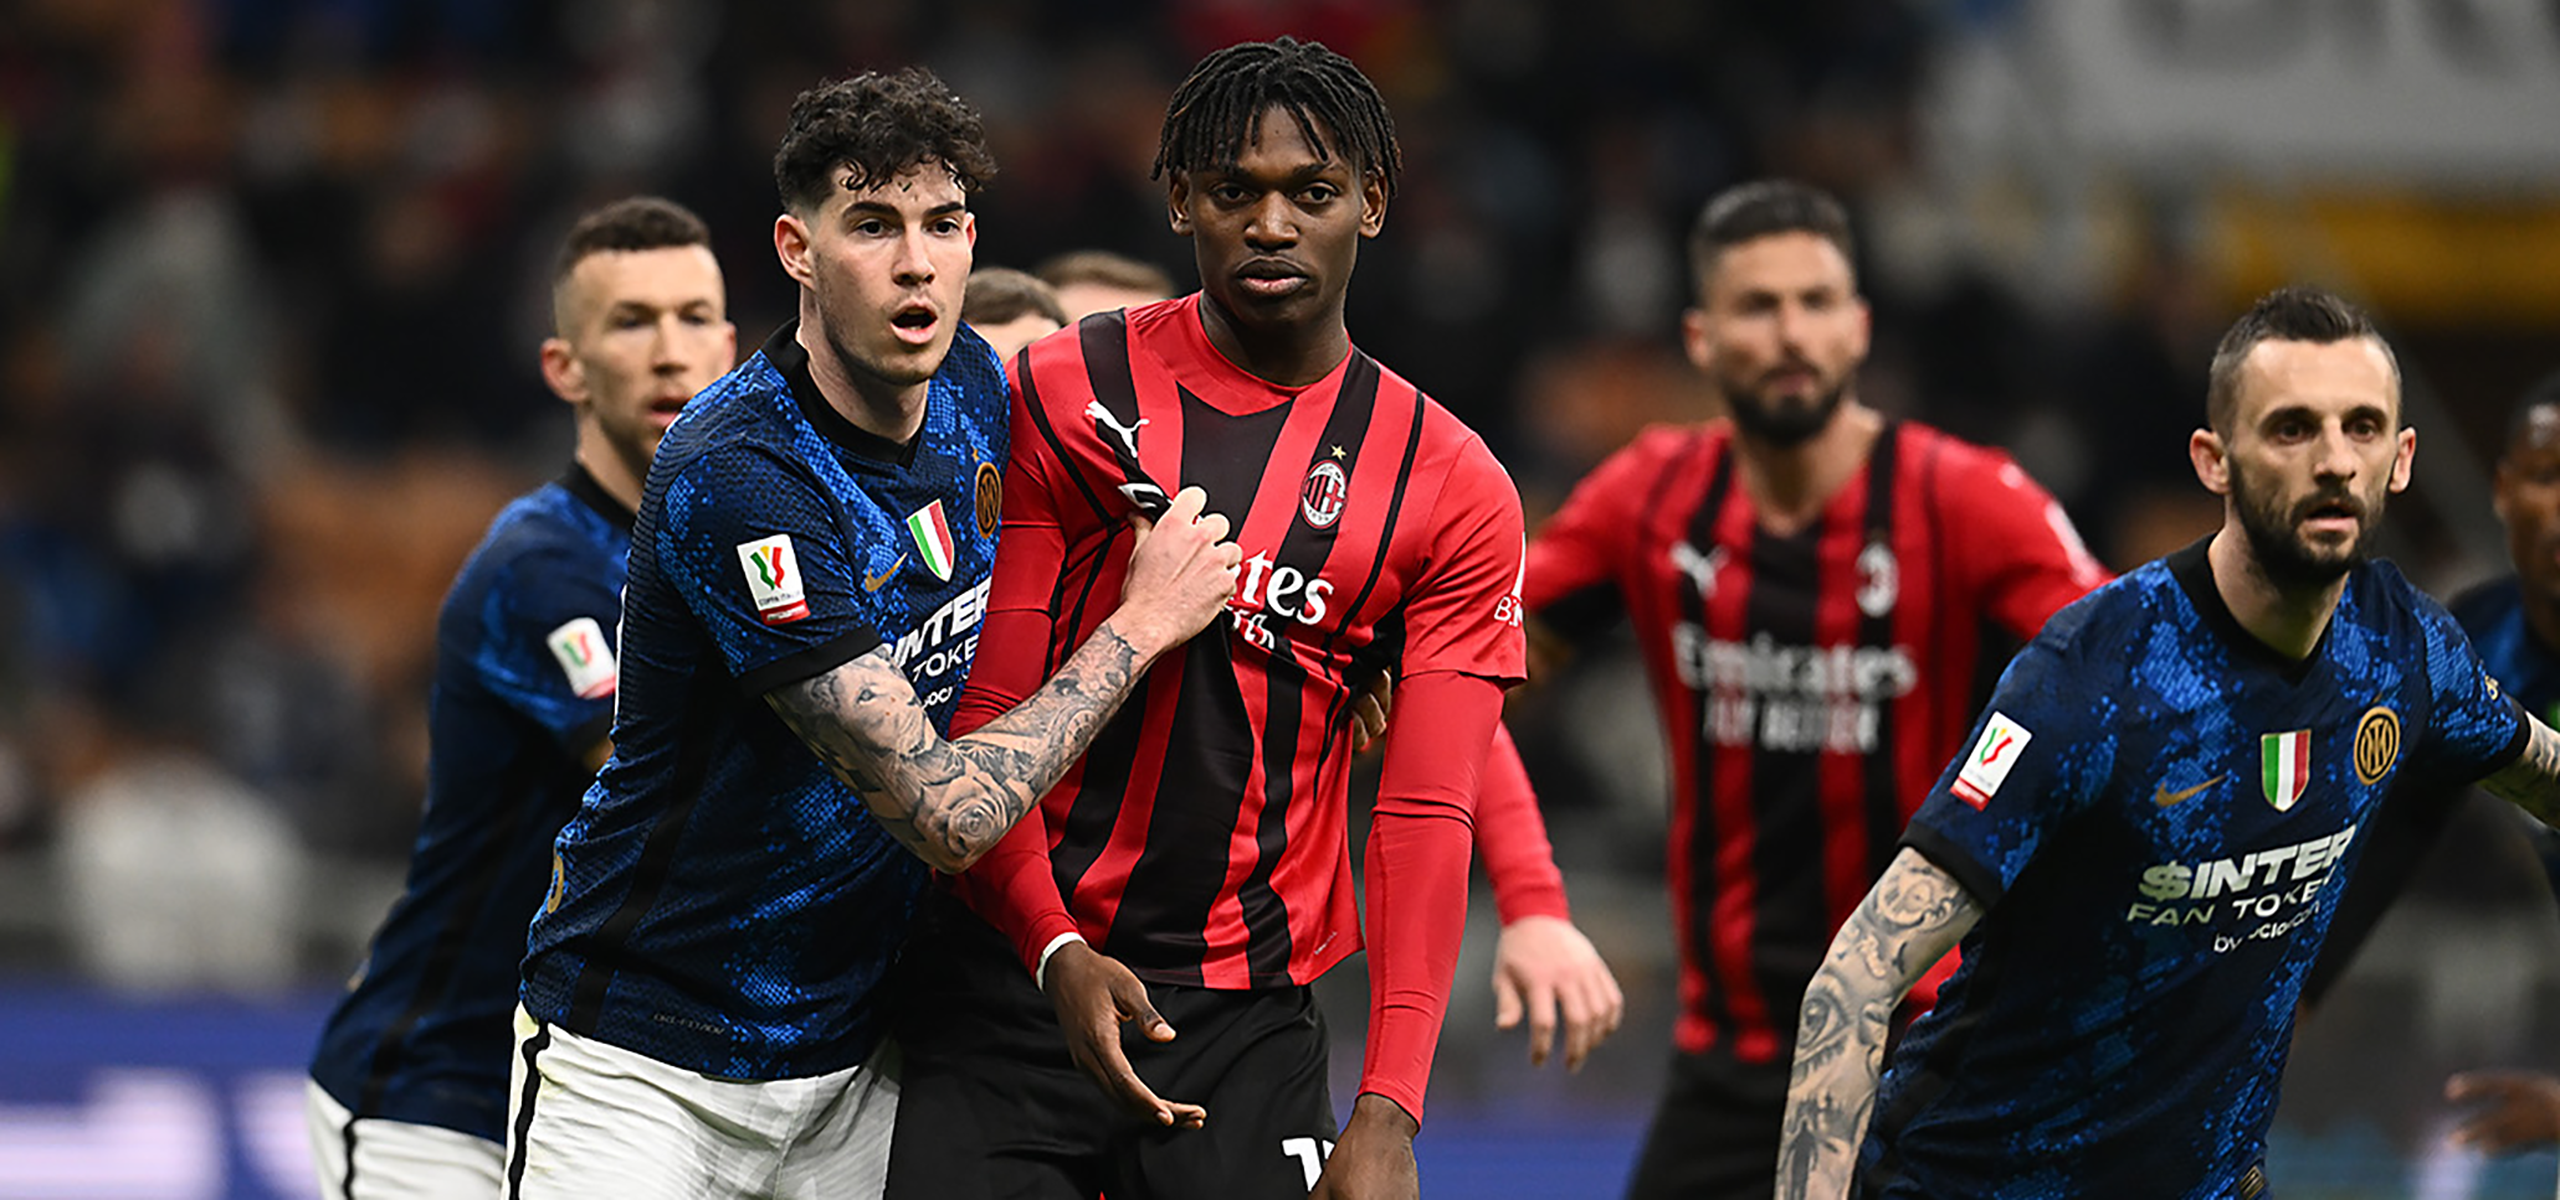 Raadplegen Beugel Tram AC Milan 0-0 Inter, Coppa Italia 2021/2022: the match report | AC Milan